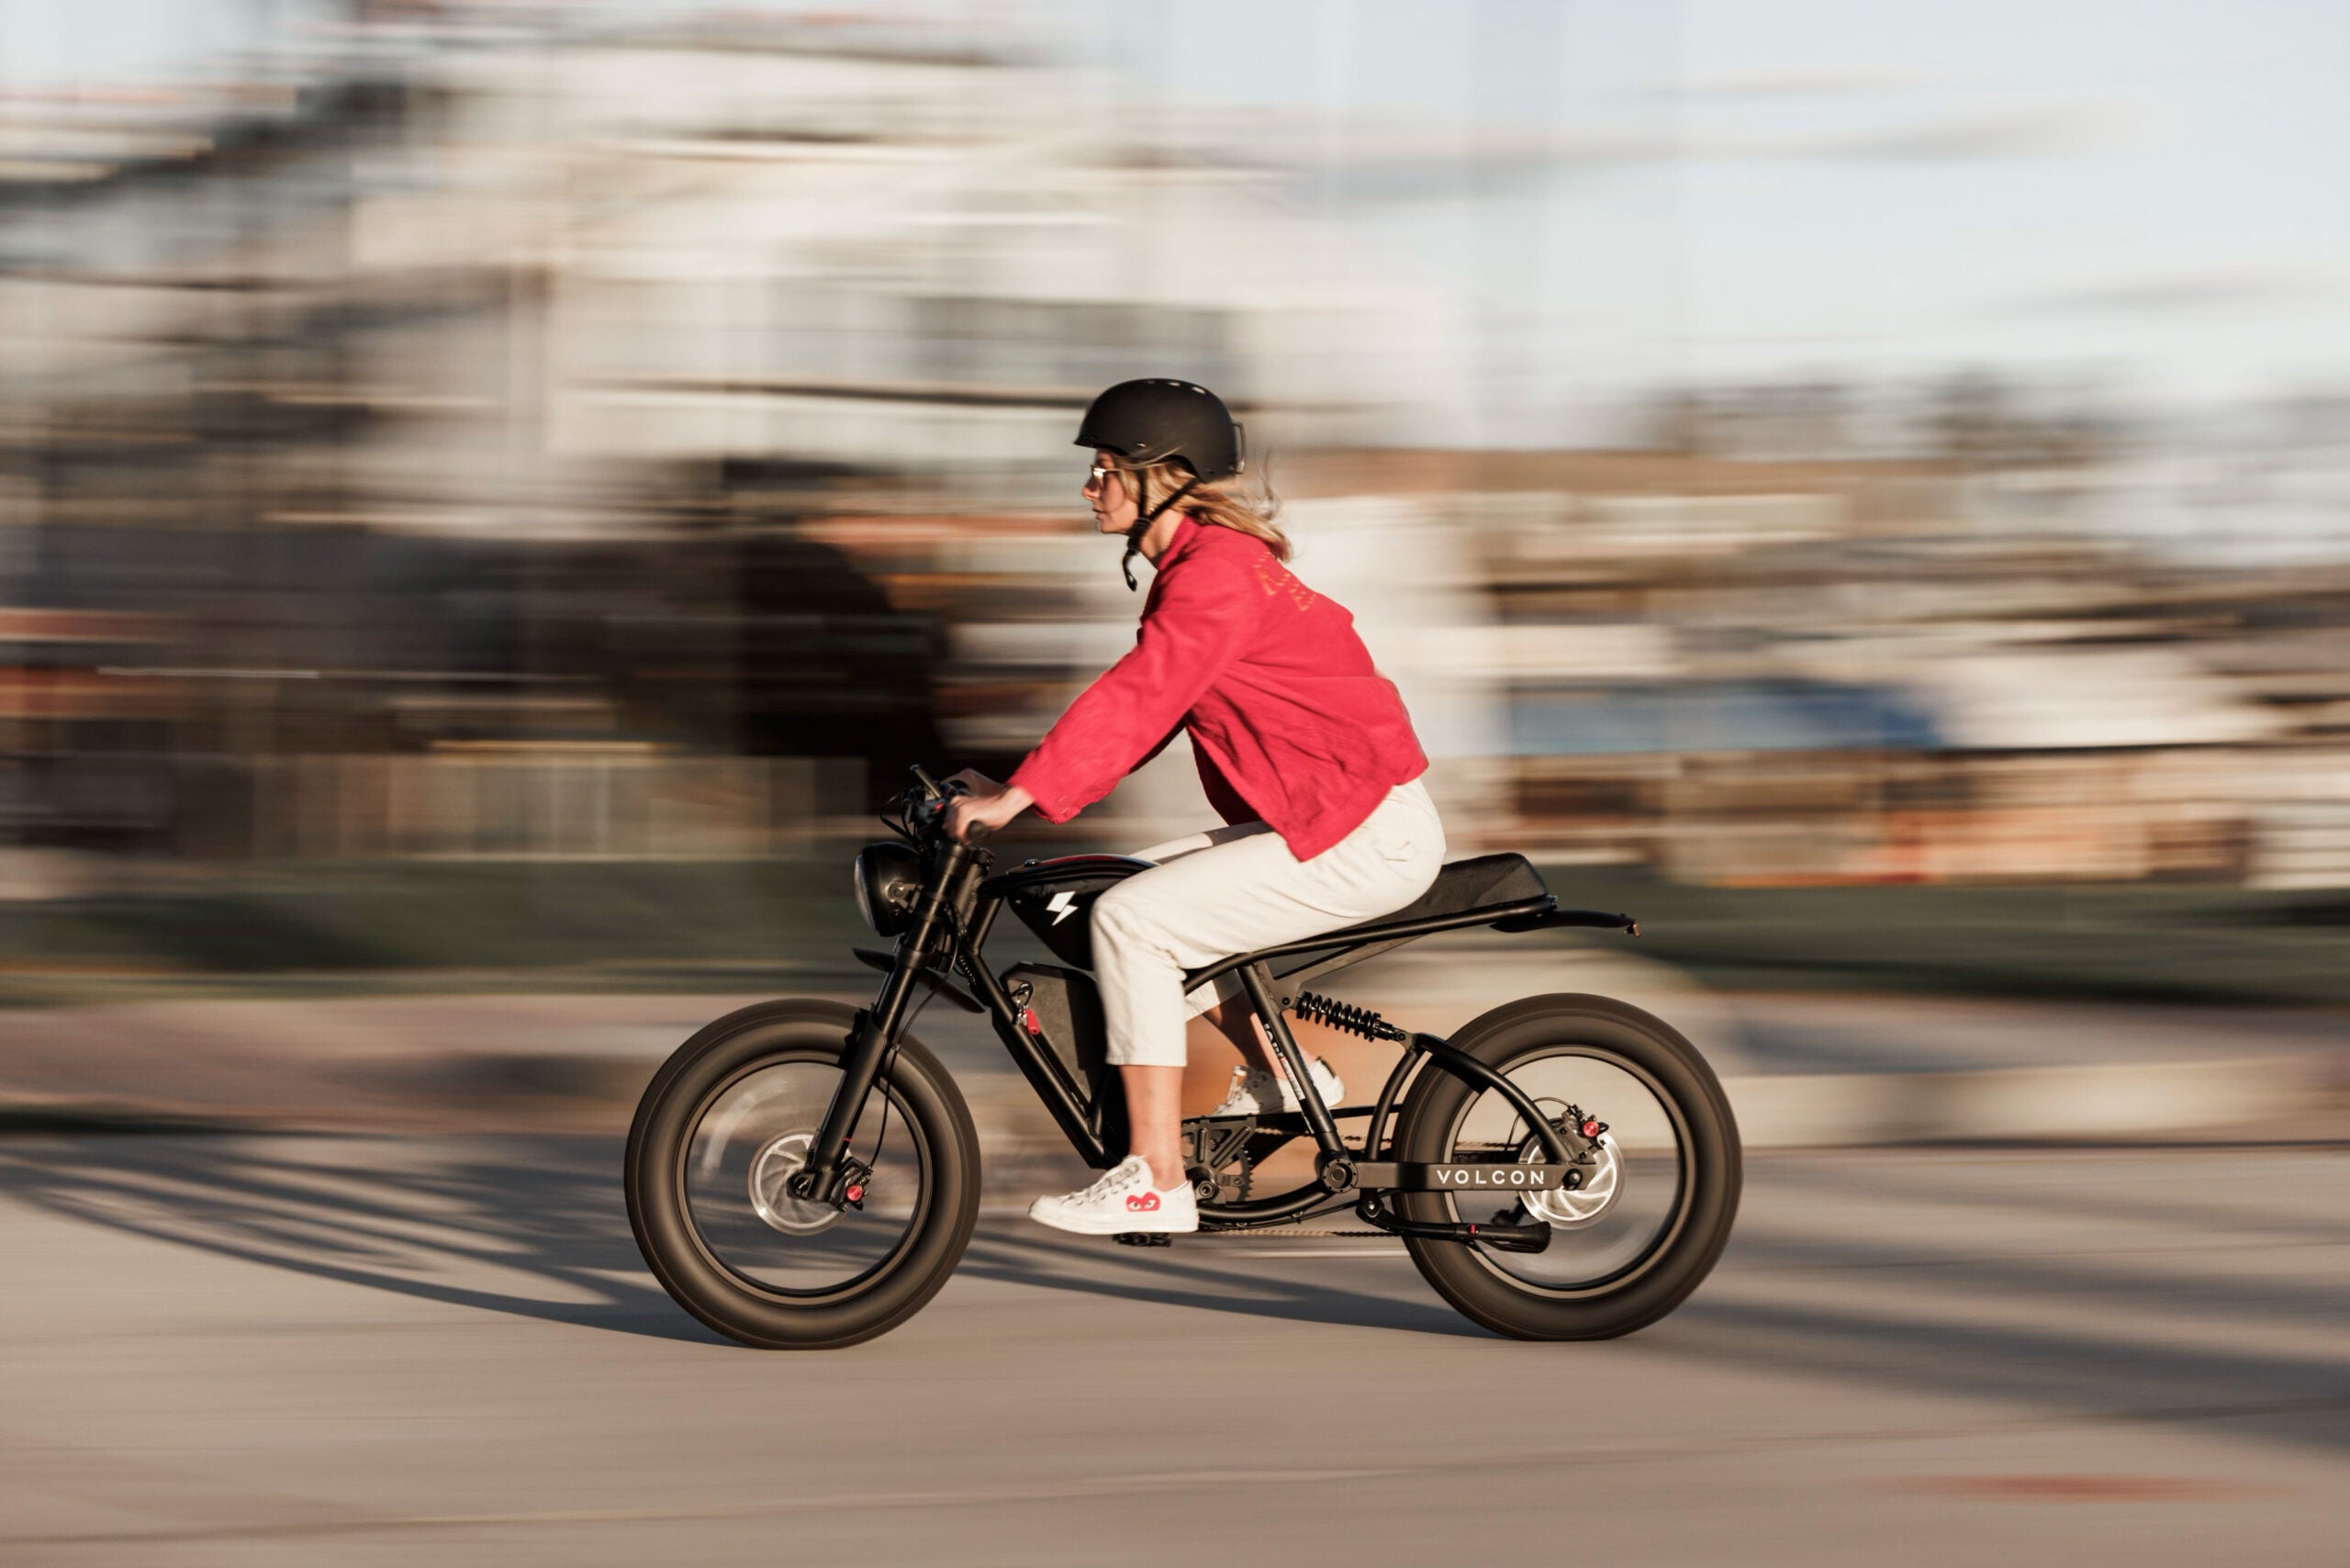 Volcon Brat: An off-road e-bike built tough enough for the big city